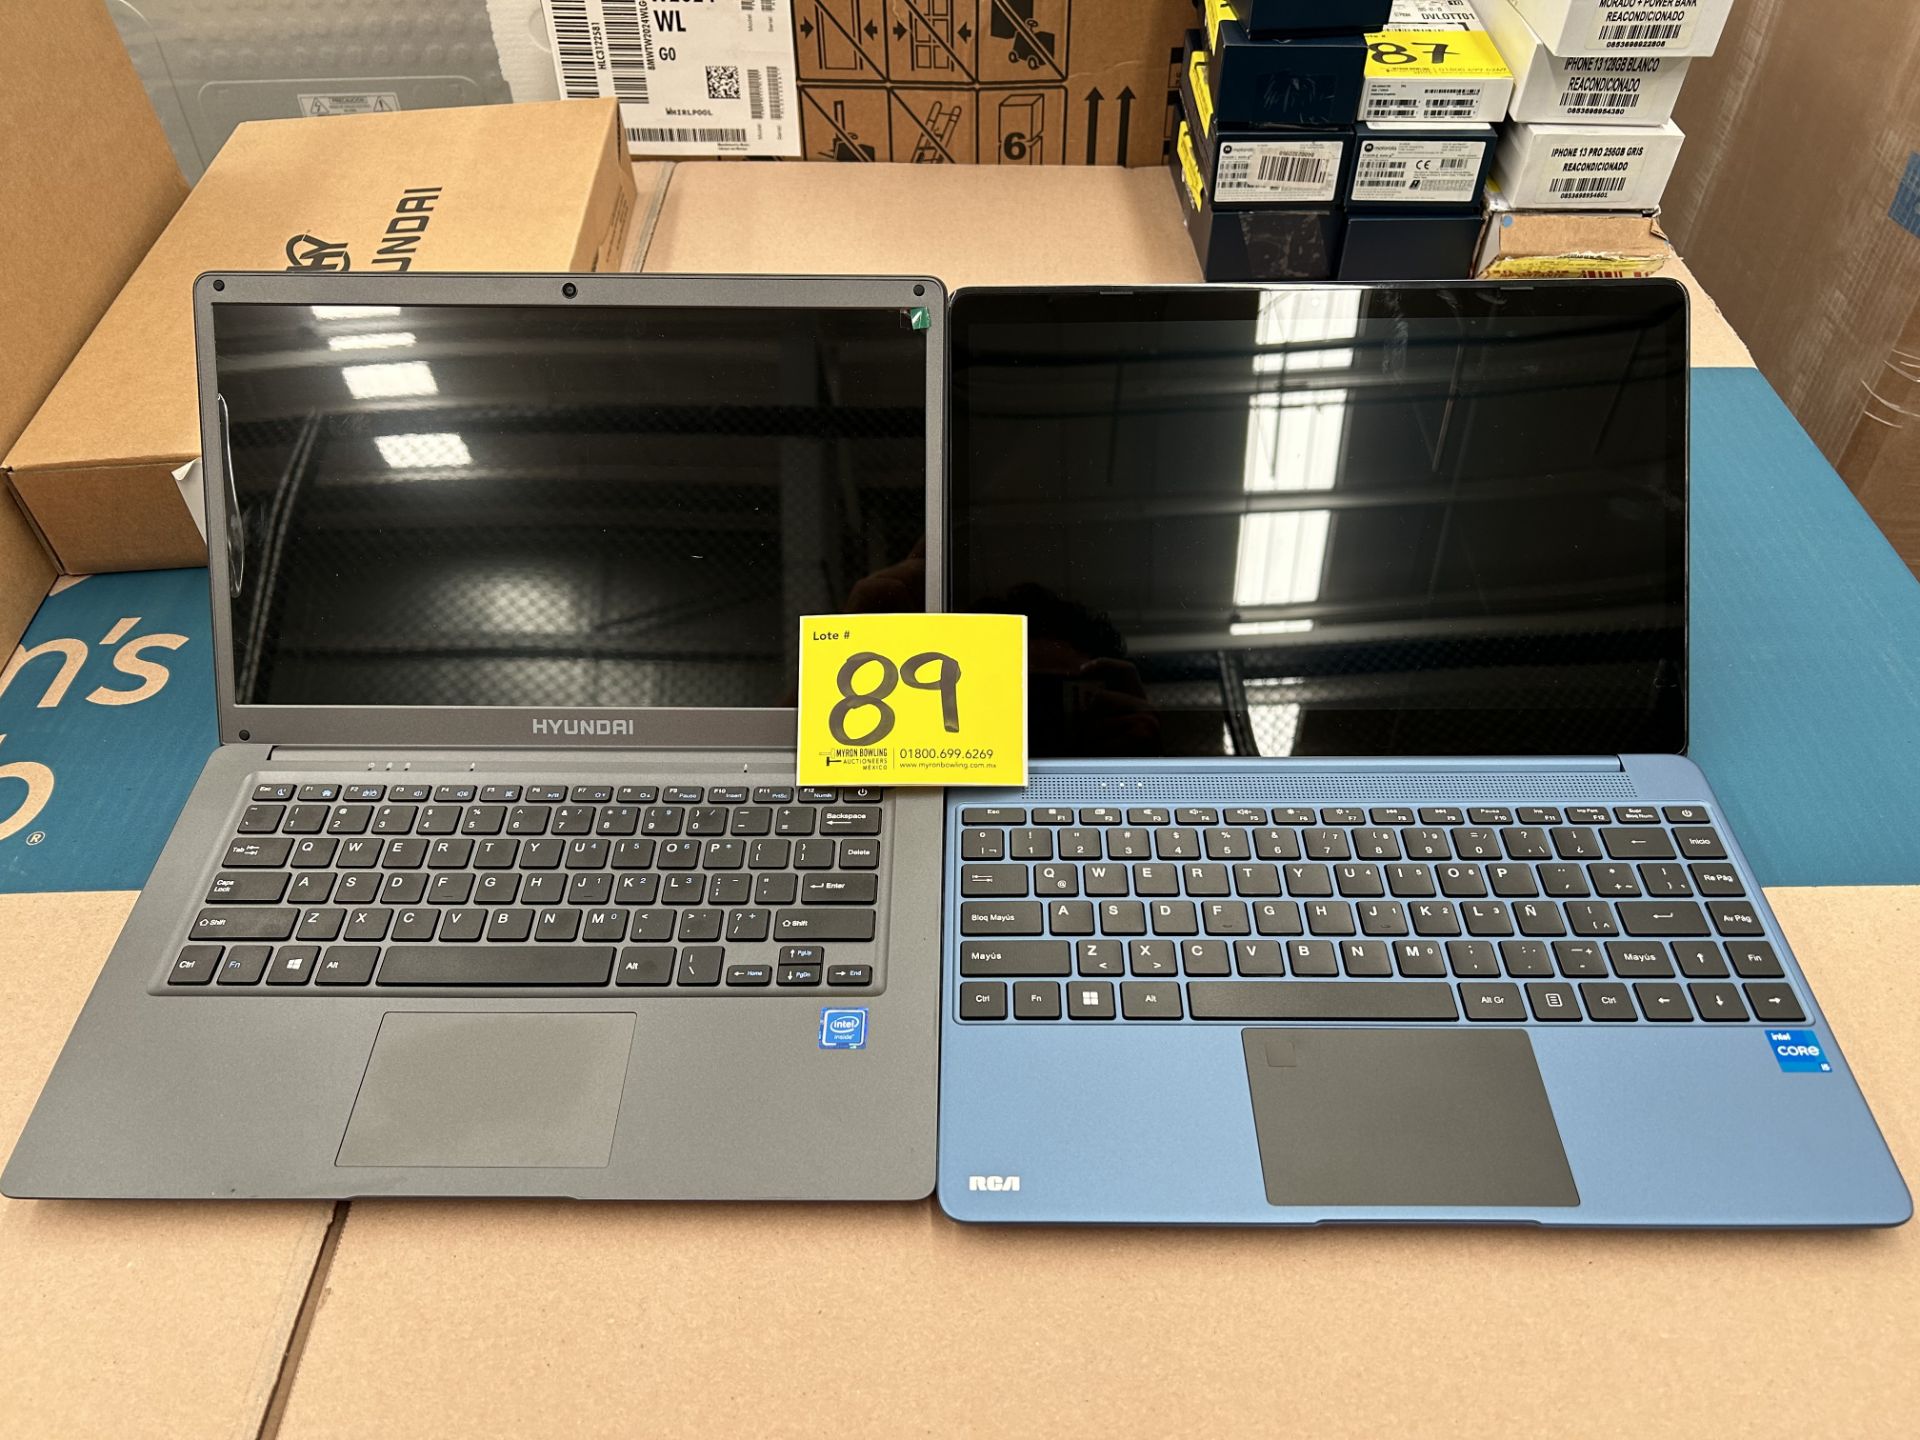 Lote de 4 laptops contiene: 1 Laptop Marca LENOVO, Modelo IDEA PAD 5, Serie spf3tdm9j, almacenamien